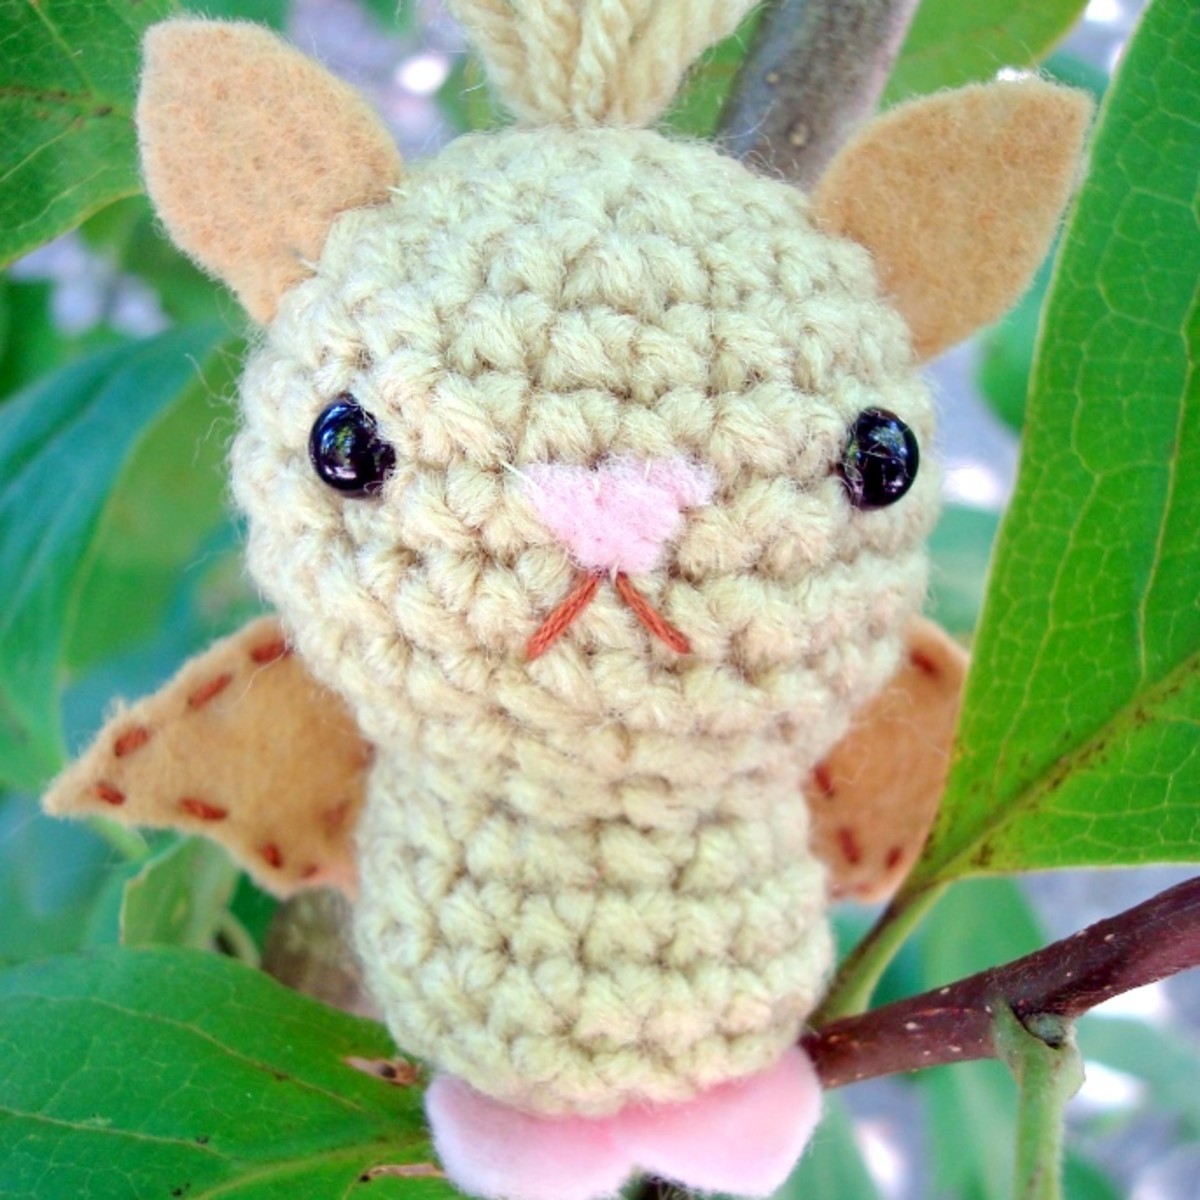 Free crochet pattern amigurumi Halloween bats.